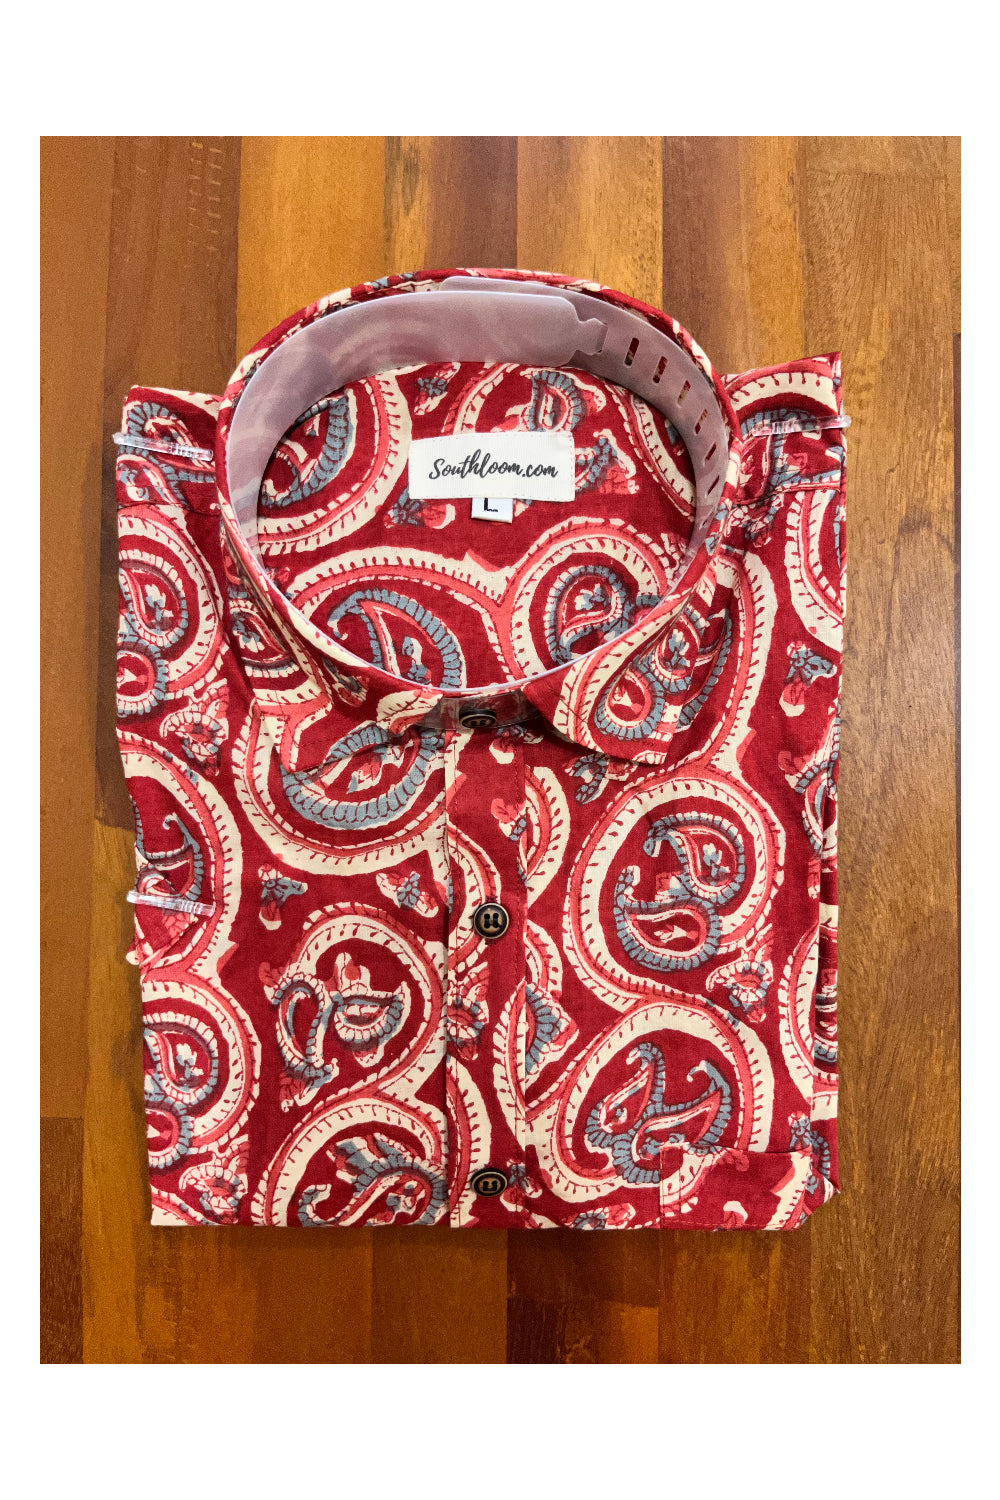 Southloom Jaipur Cotton Red Hand Block Printed Shirt (Half Sleeves)